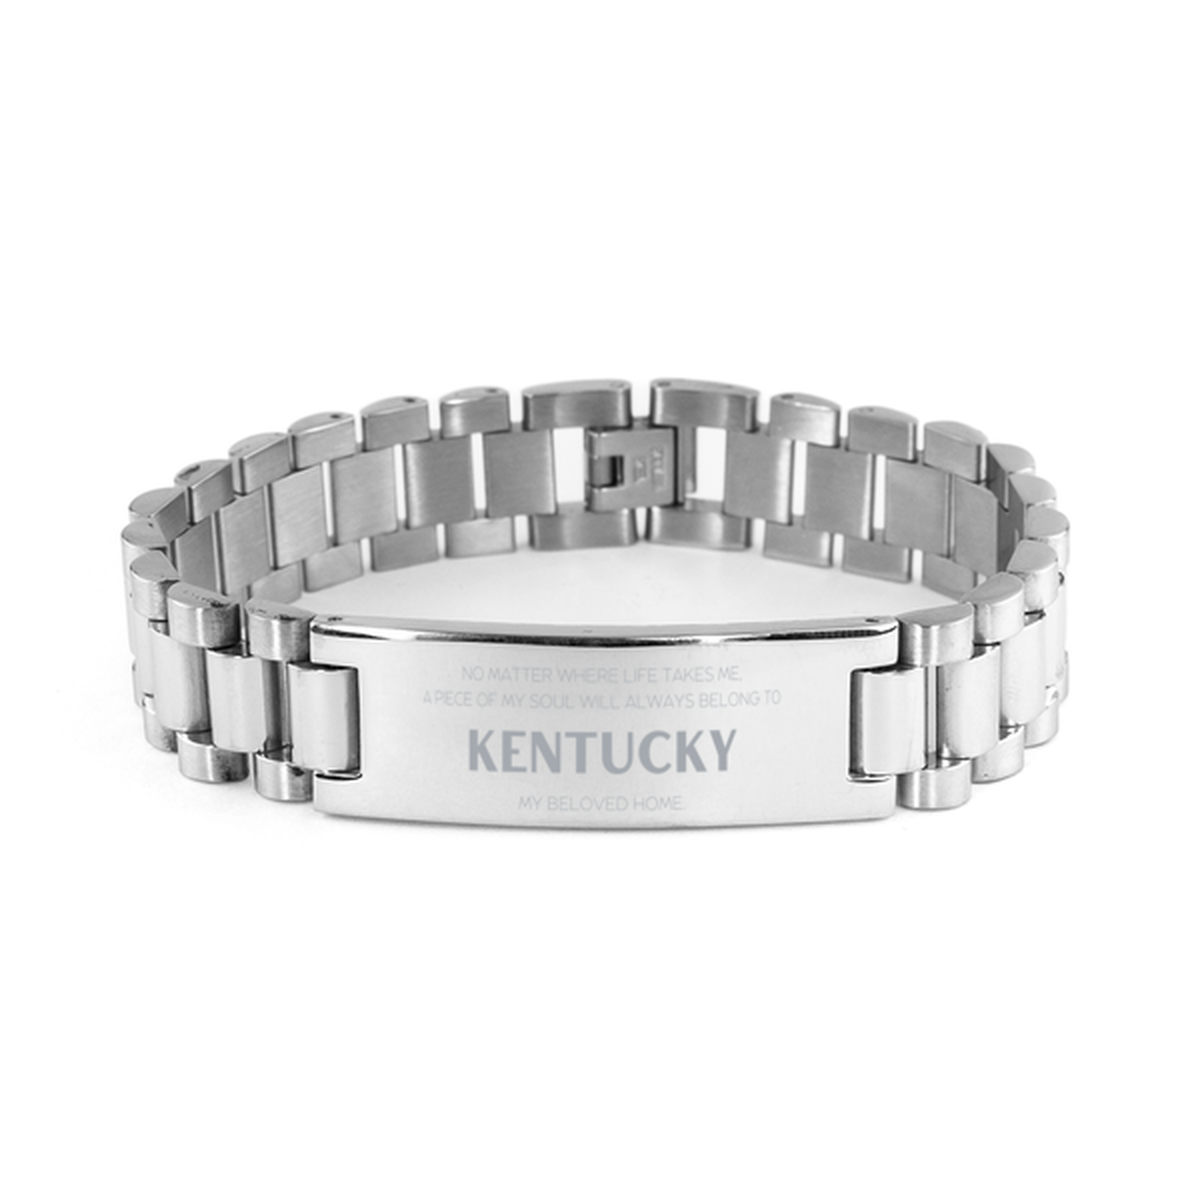 Love Kentucky State Gifts, My soul will always belong to Kentucky, Proud Ladder Stainless Steel Bracelet, Birthday Unique Gifts For Kentucky Men, Women, Friends